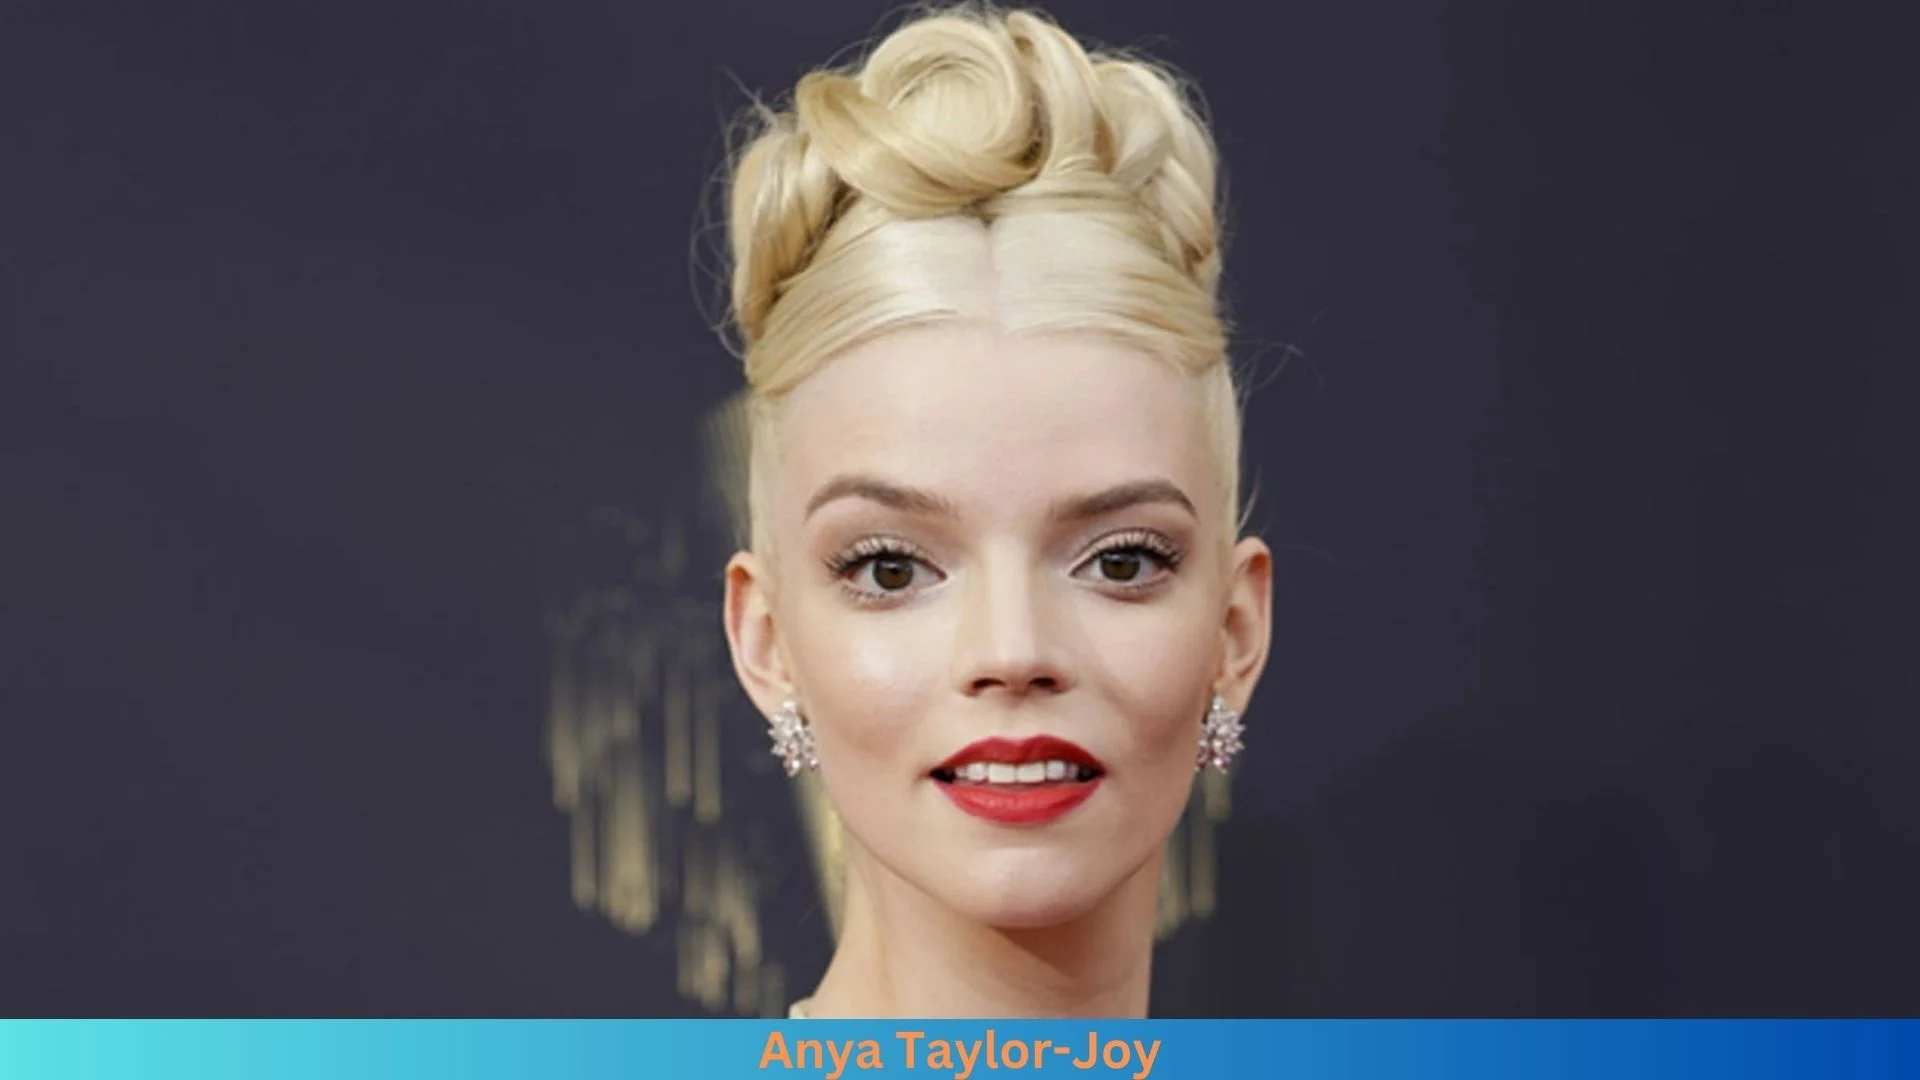 Net Worth of Anya Taylor-Joy